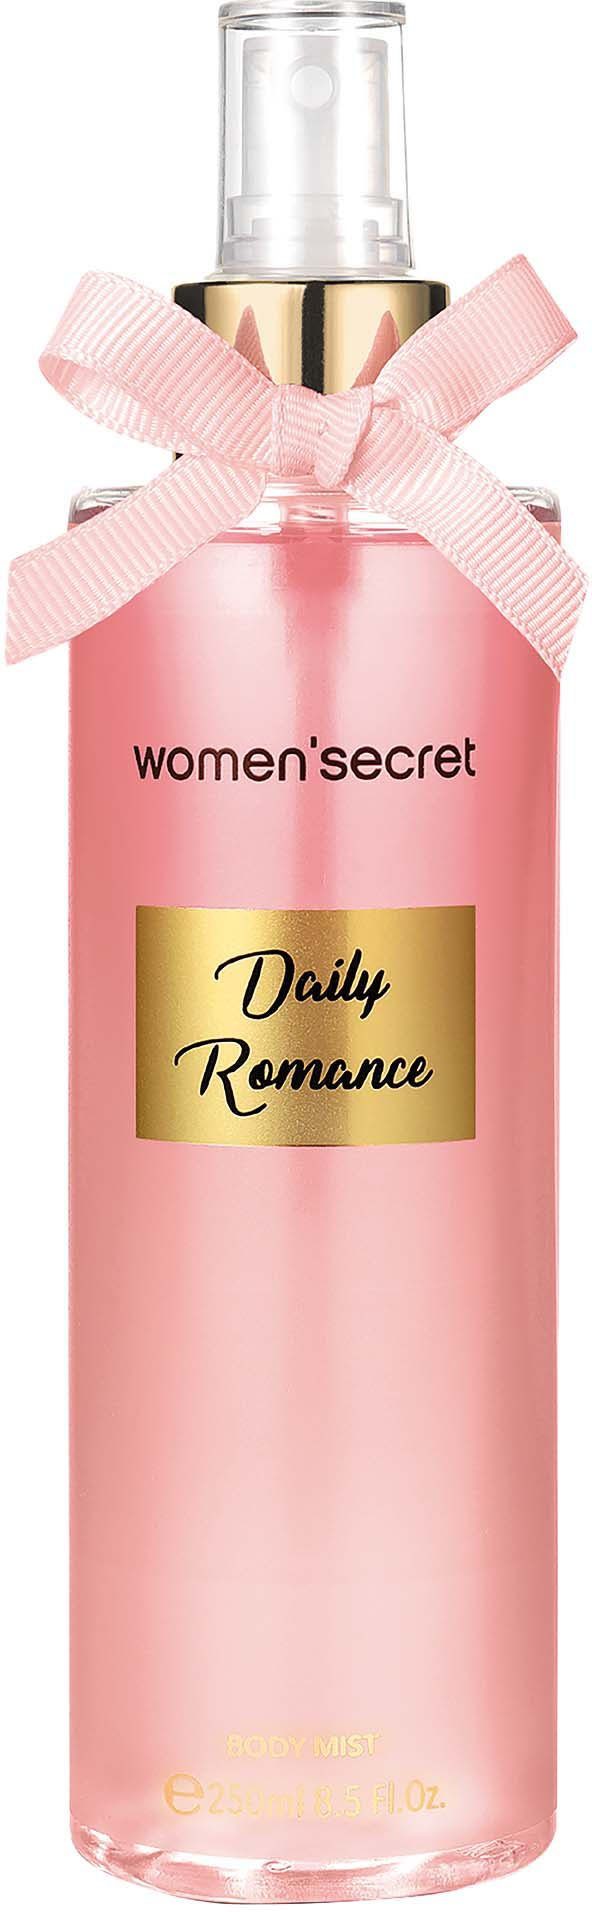 women'secret Körperspray Body Mist - Daily Romance